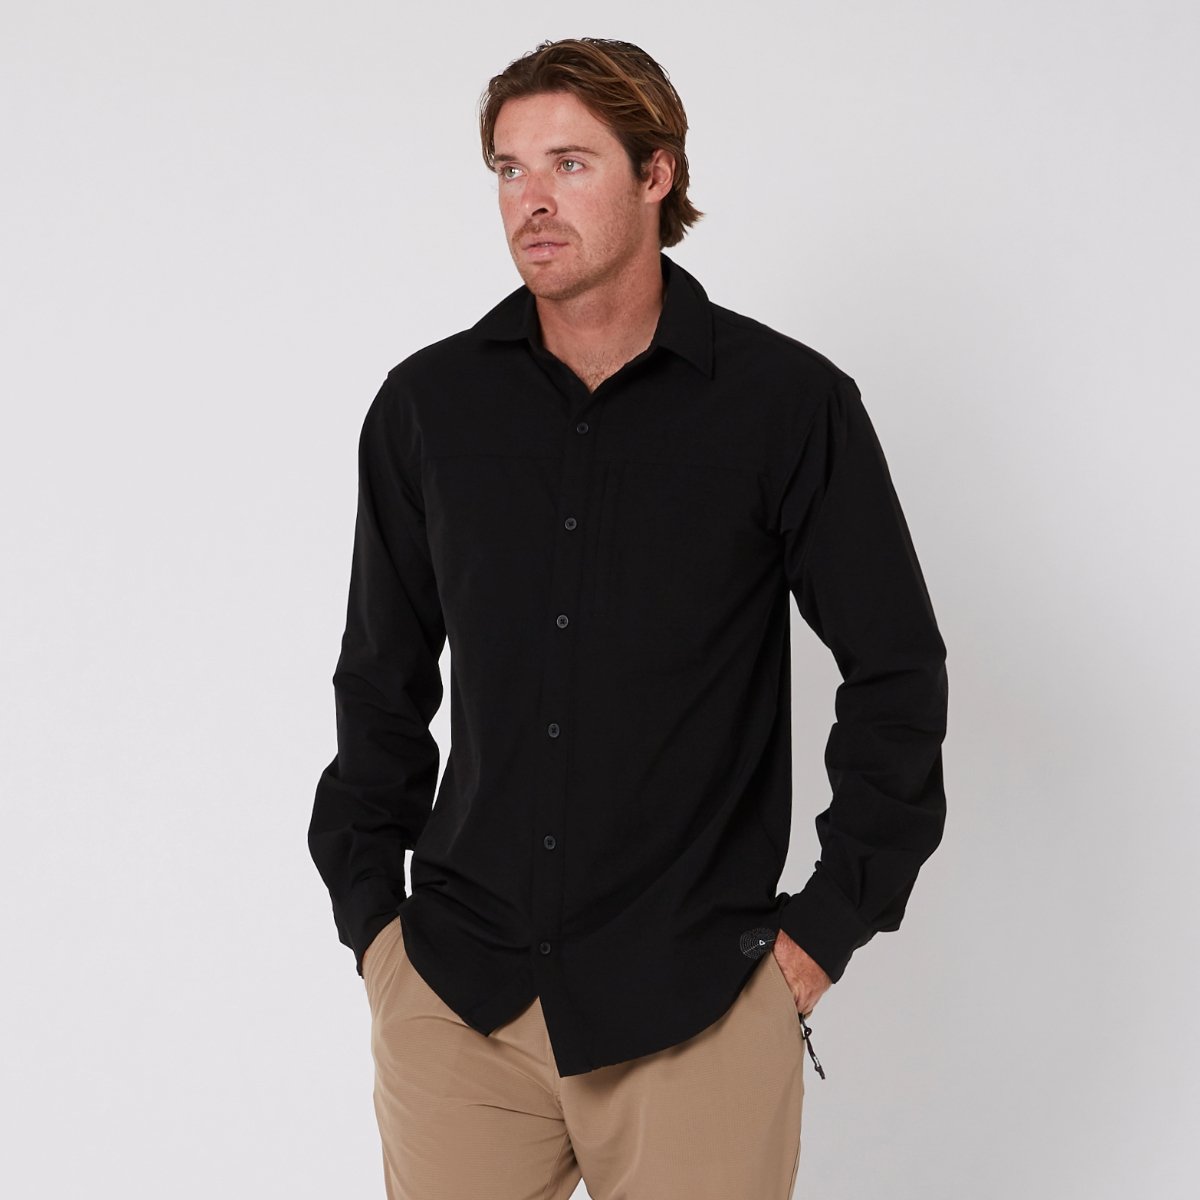 Follow Sun Shirt Long Sleeve in Black - BoardCo